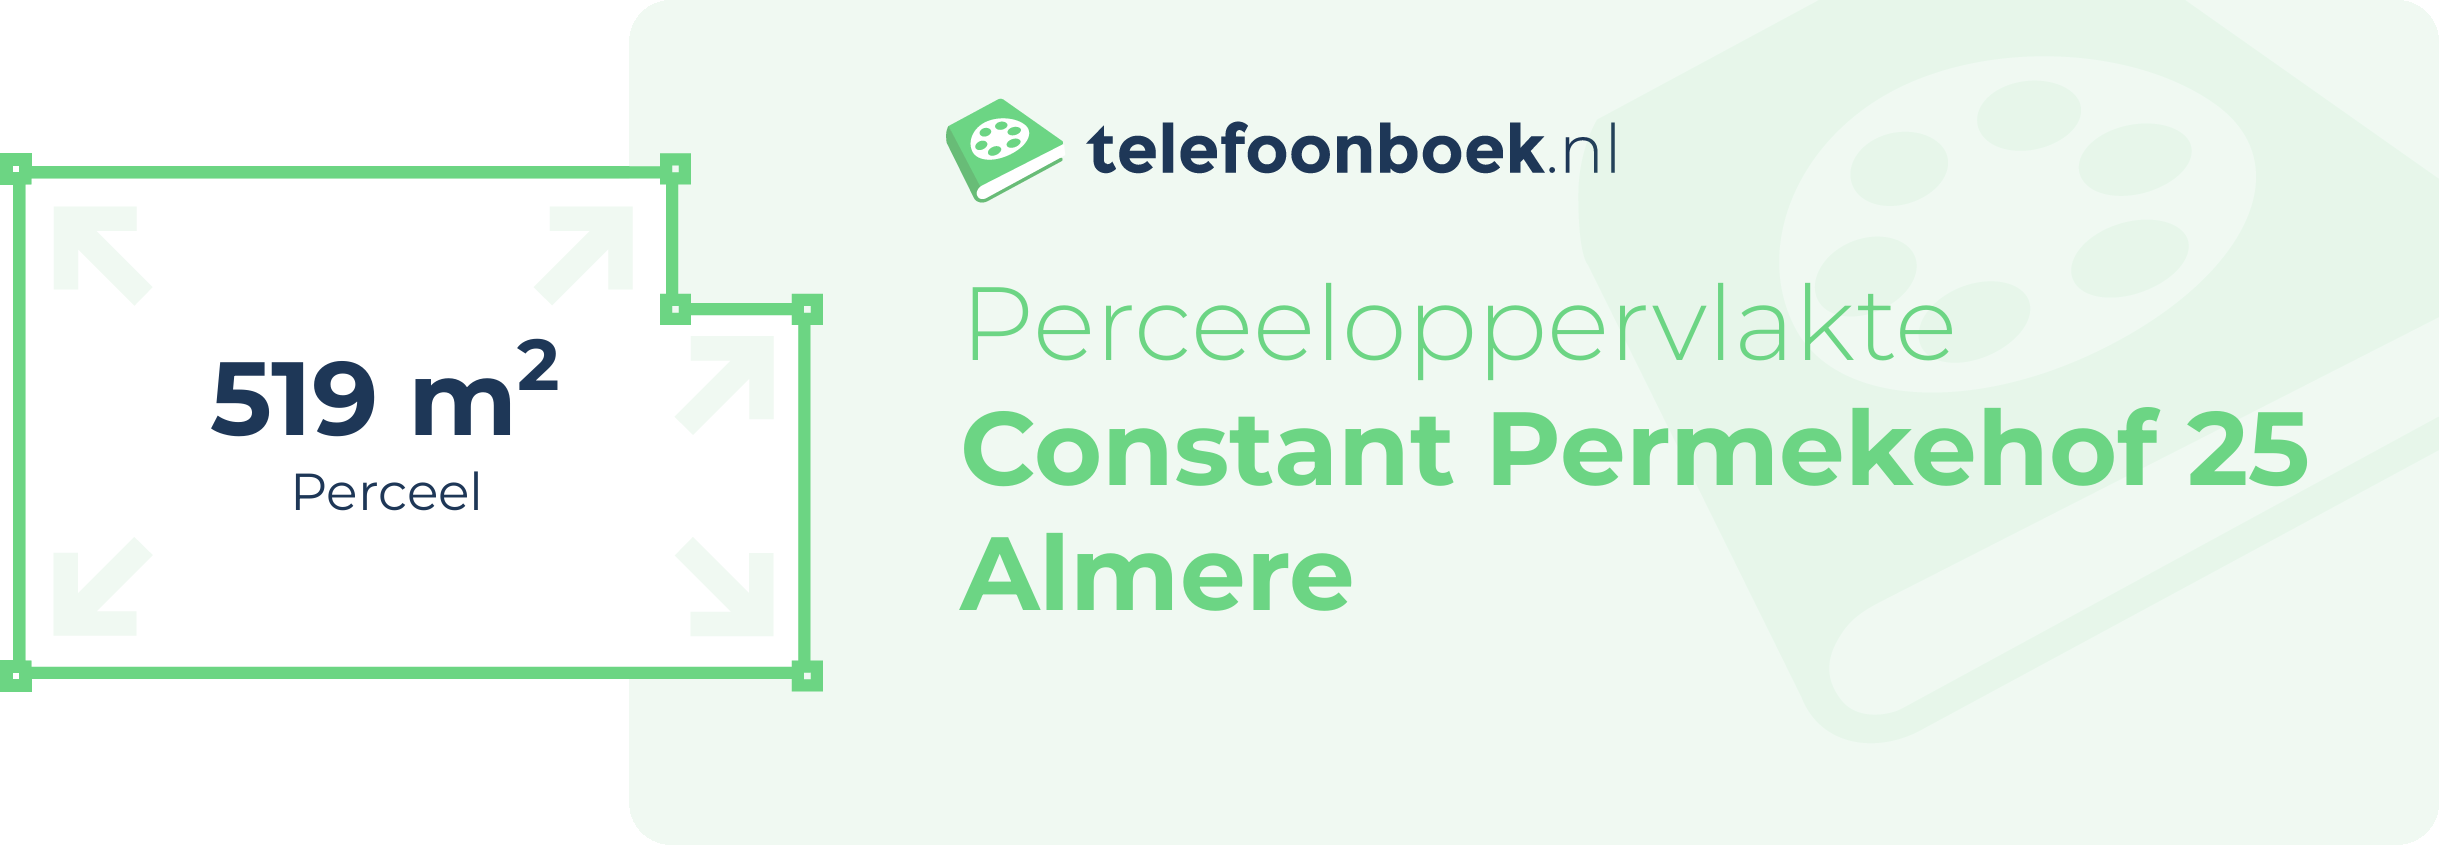 Perceeloppervlakte Constant Permekehof 25 Almere